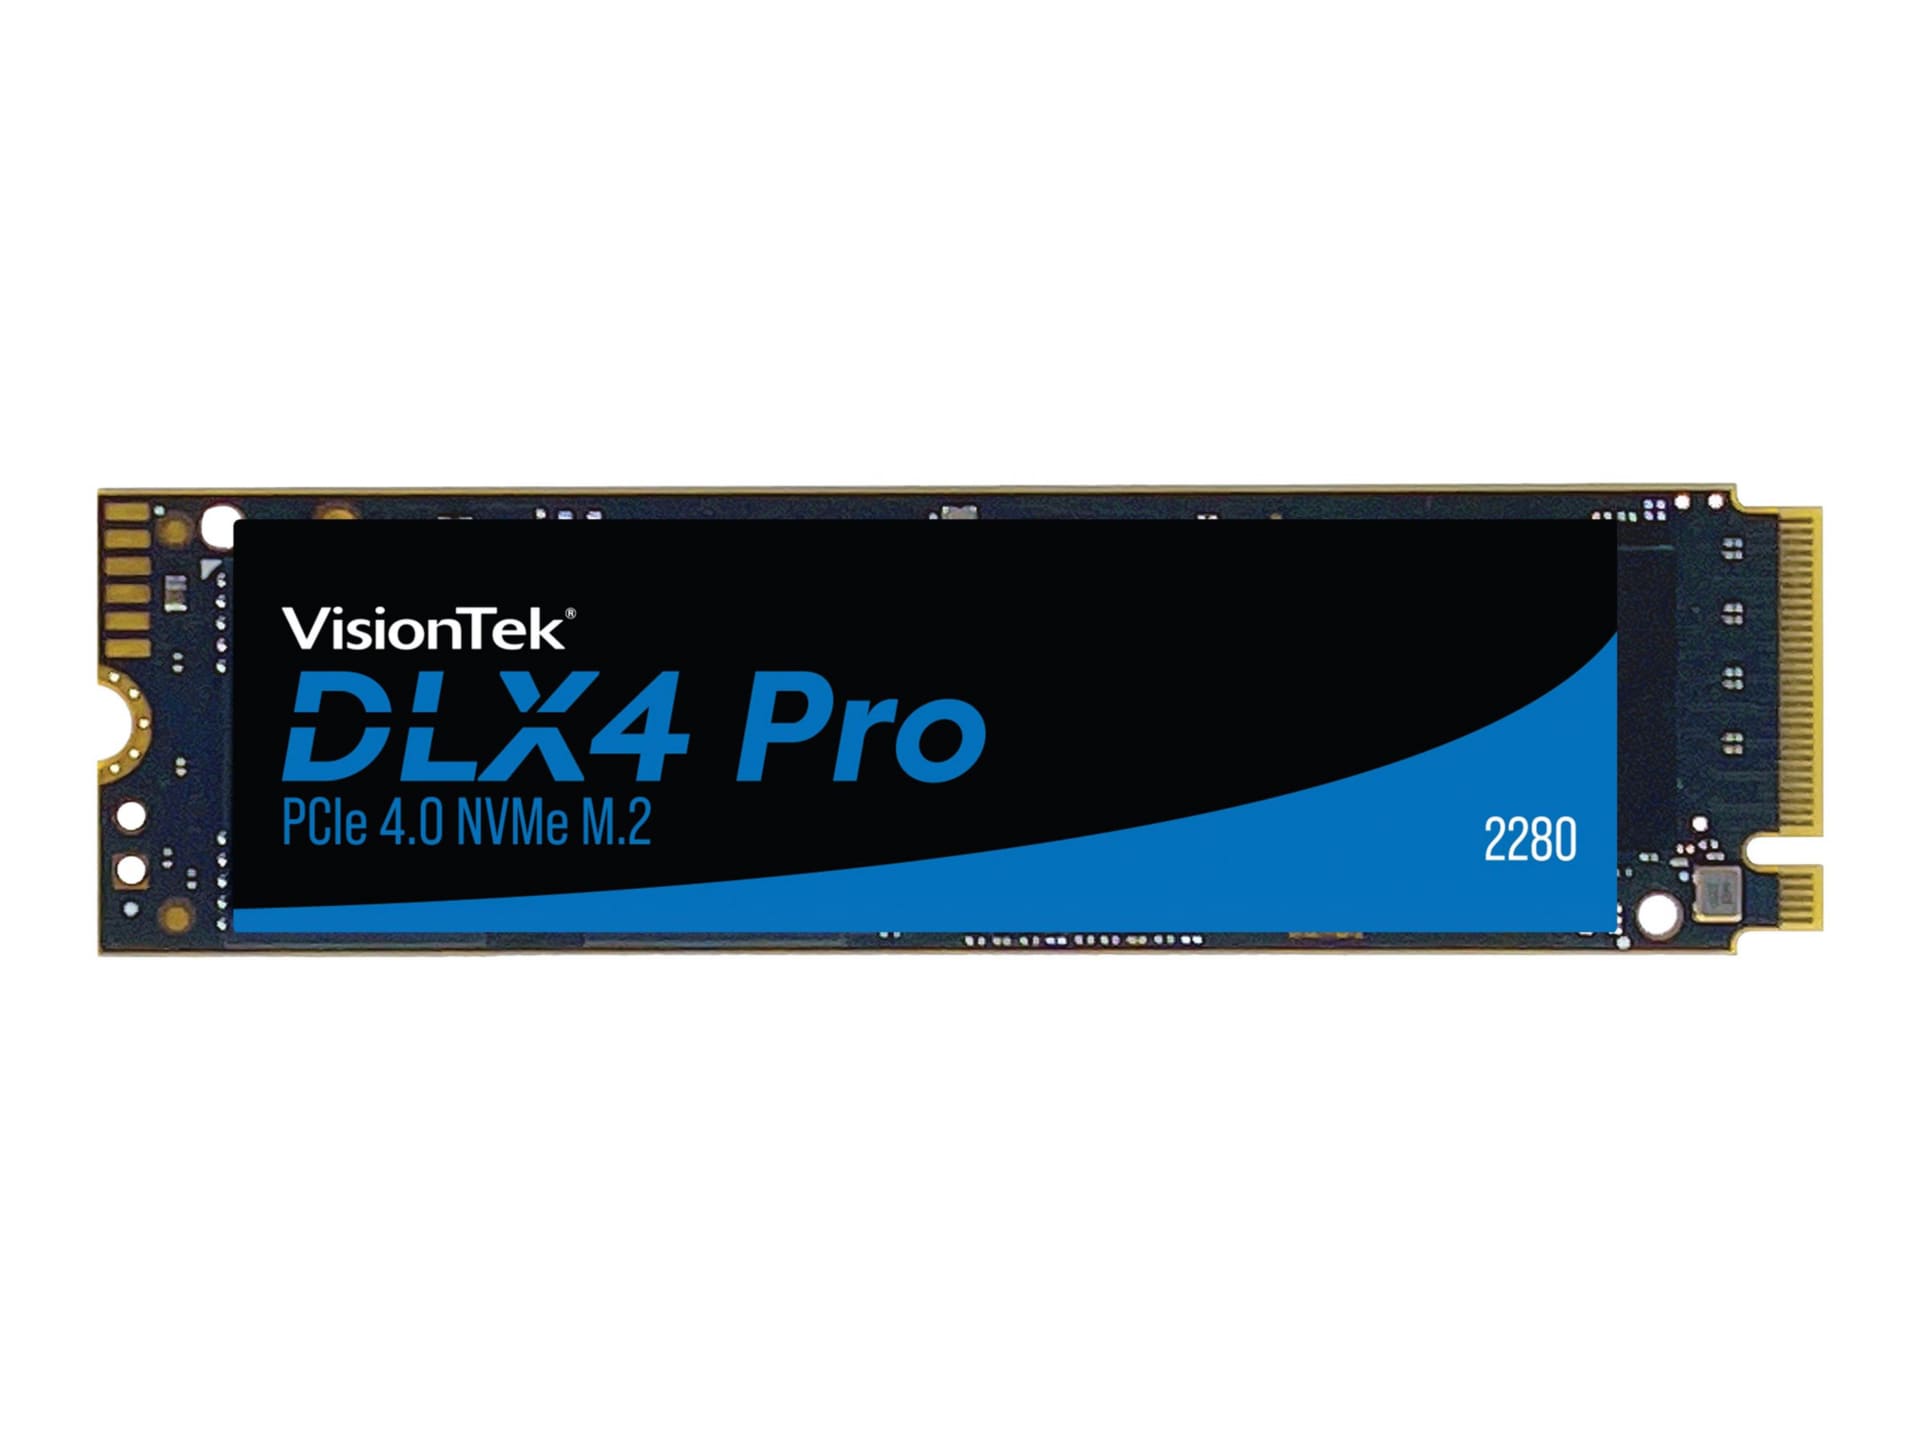 VisionTek DLX4 Pro 512 GB Solid State Drive - M.2 2280 Internal - PCI Express NVMe (PCI Express NVMe 4.0 x4)